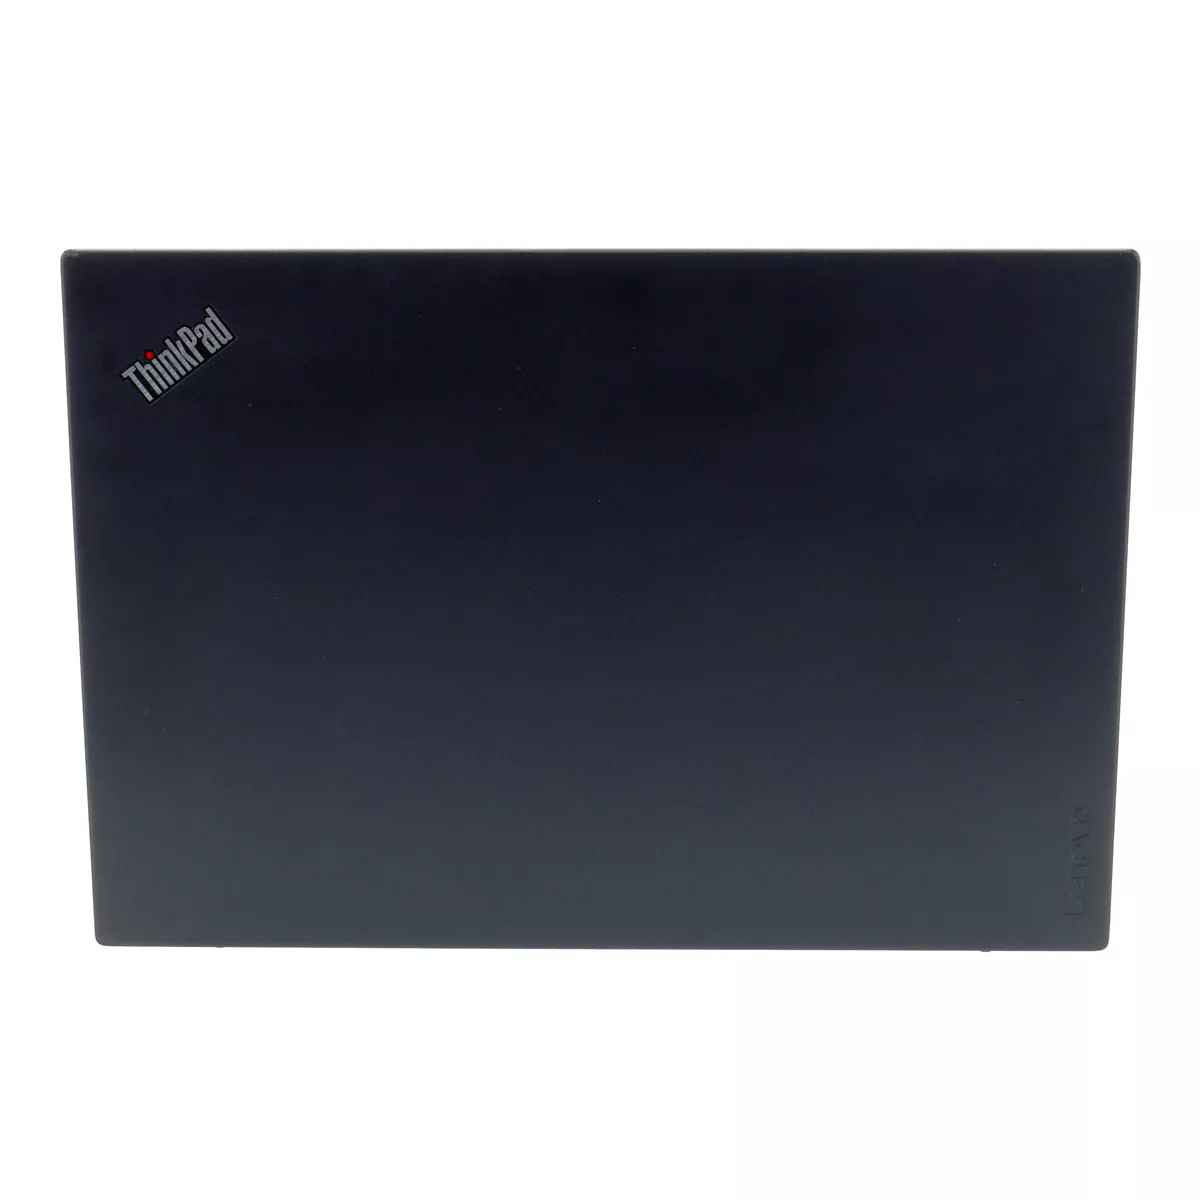 Lenovo ThinkPad T580 Core i5 8250U Full-HD 240 GB M.2 nVME SSD Webcam A